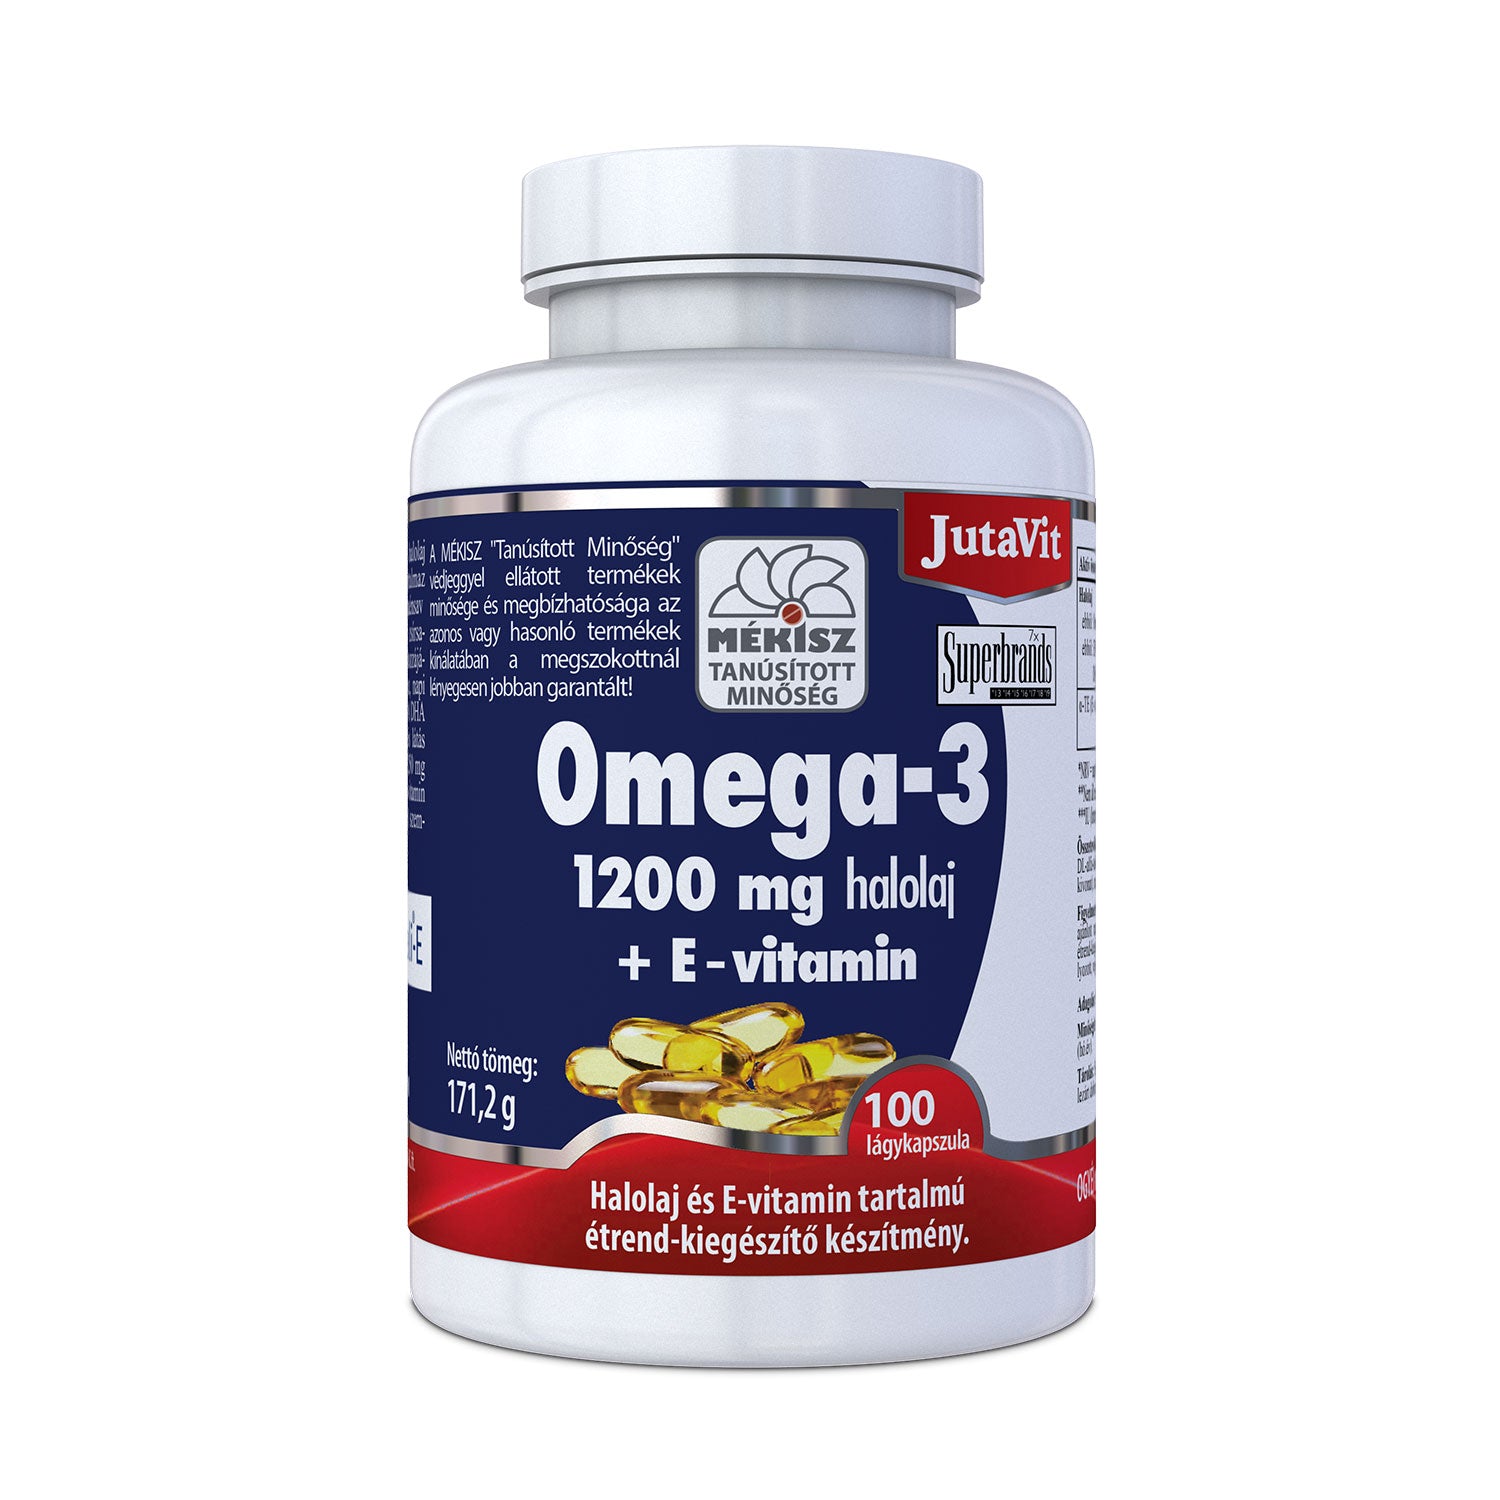 Jutavit Omega-3 Halolaj + E-vitamin 1200 Mg tabletta 100 db